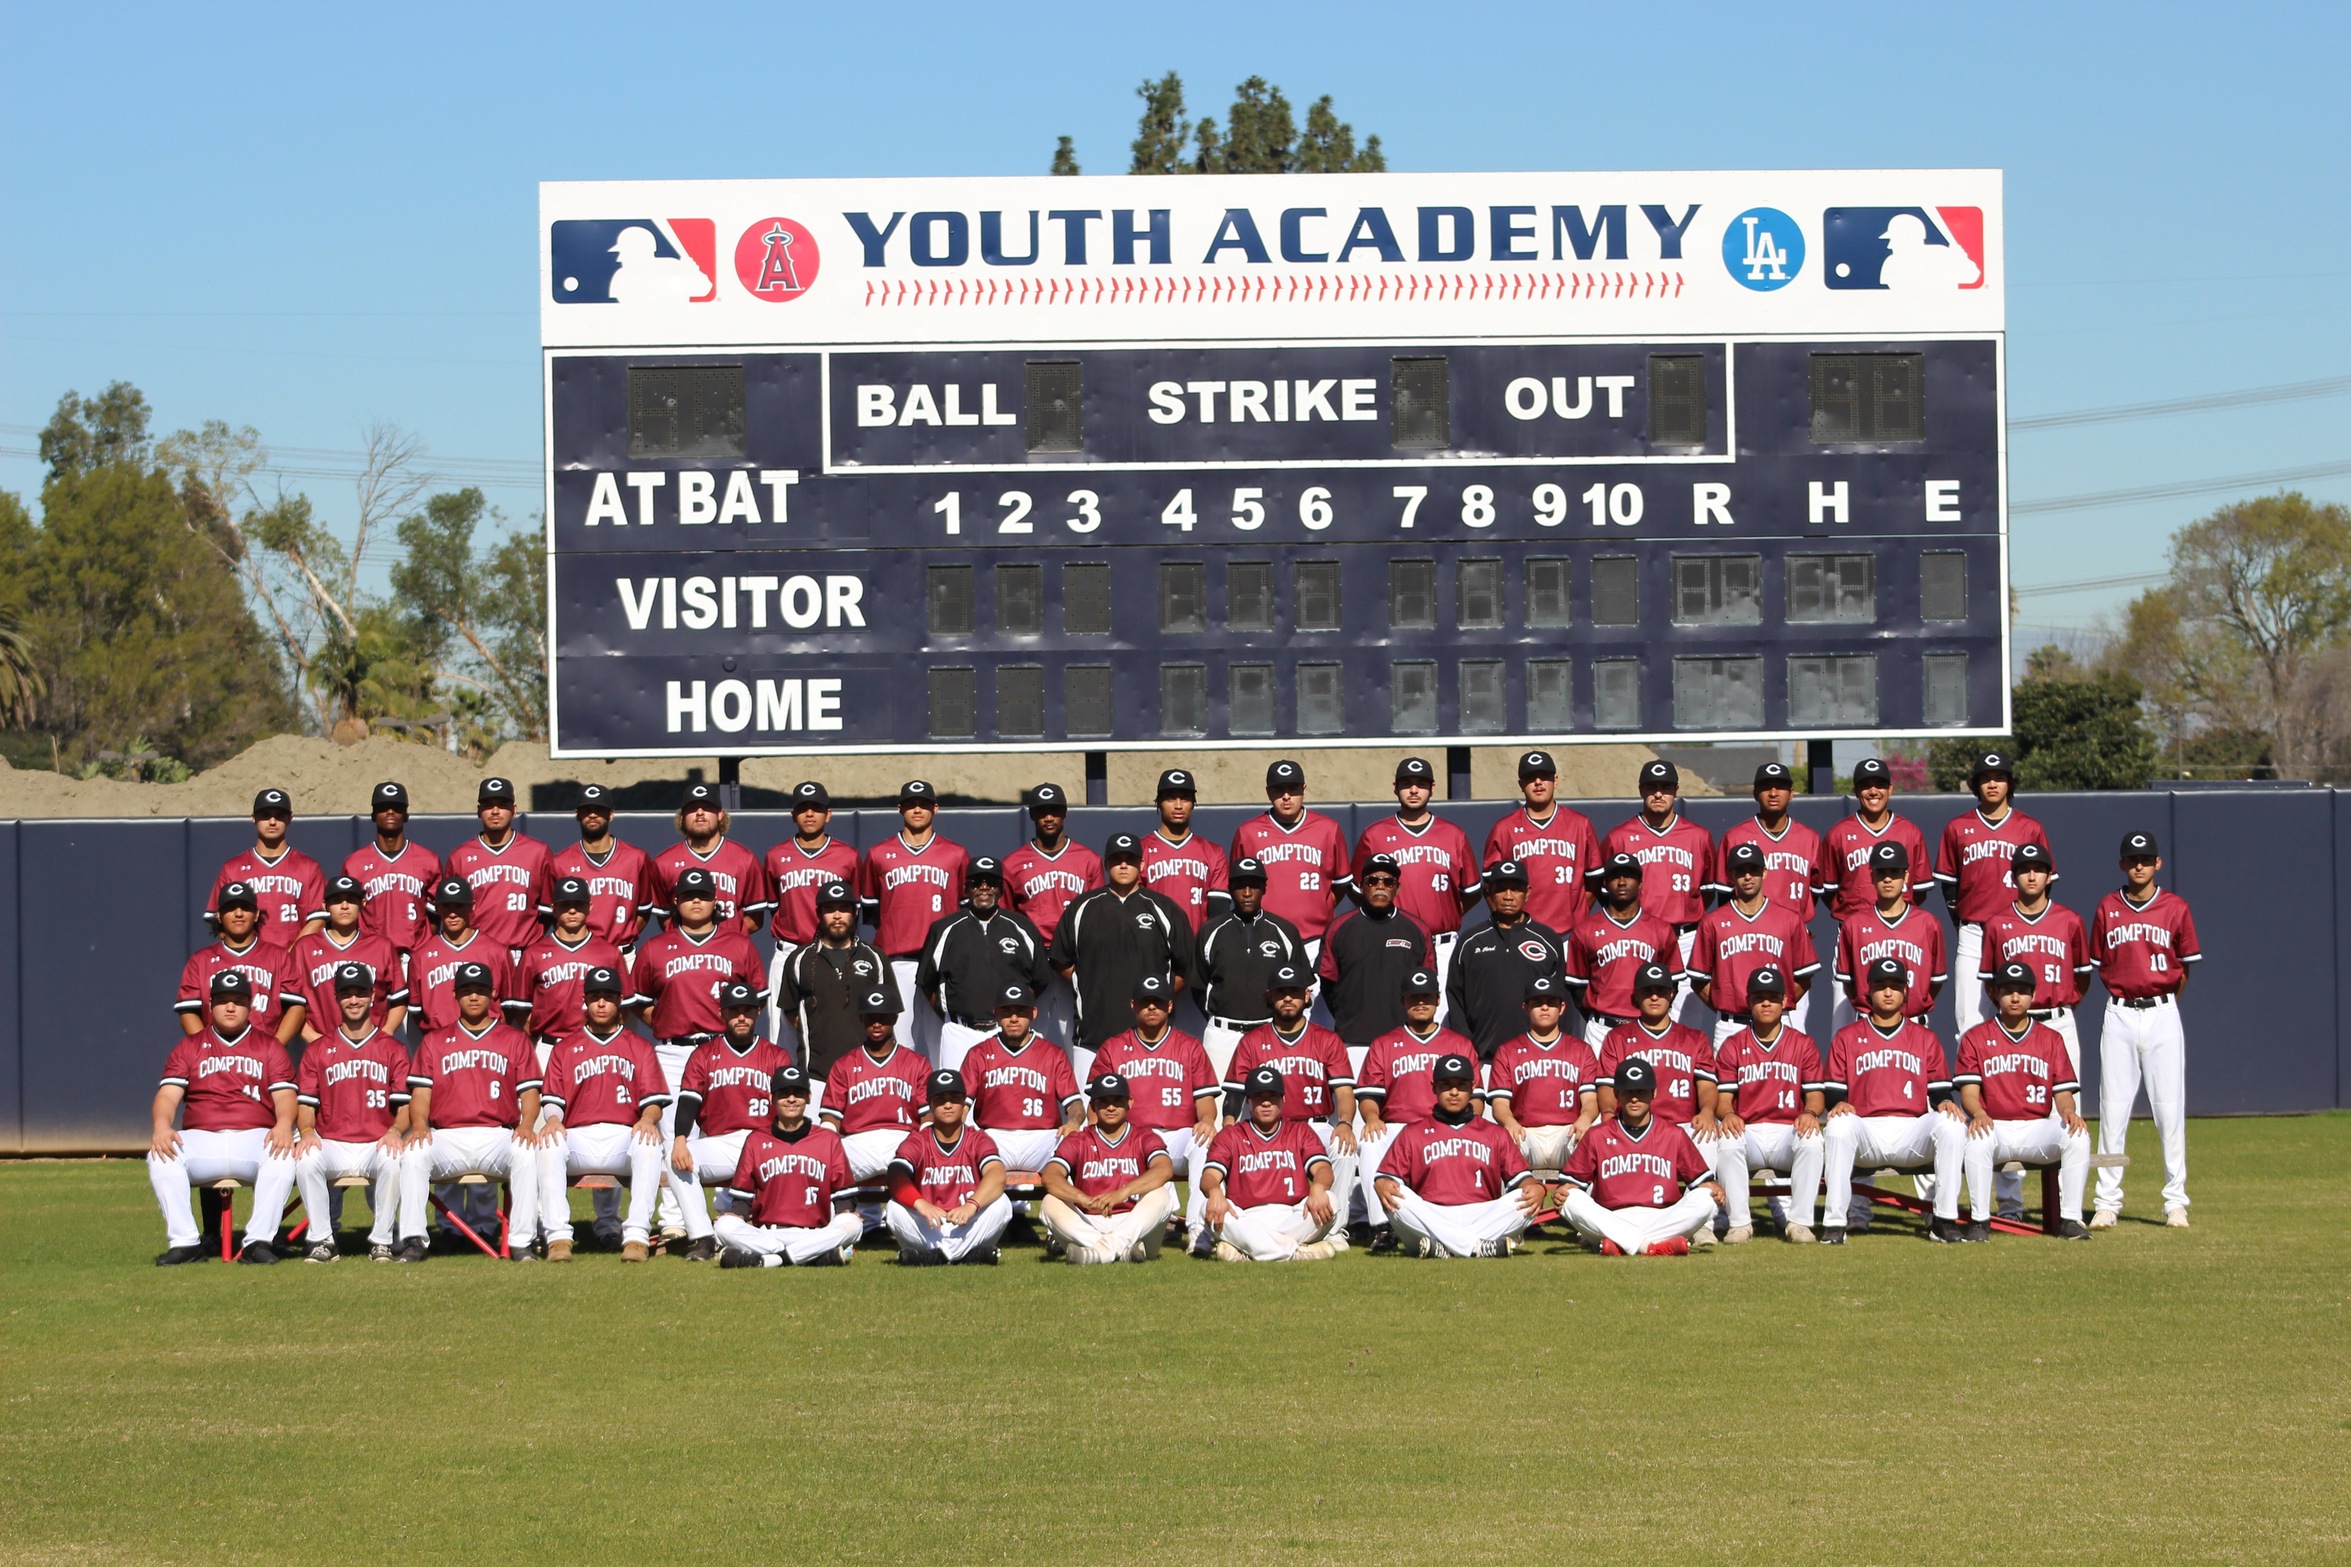  Compton College Tartars baseball team gets the 7-4 win in total team fashion.